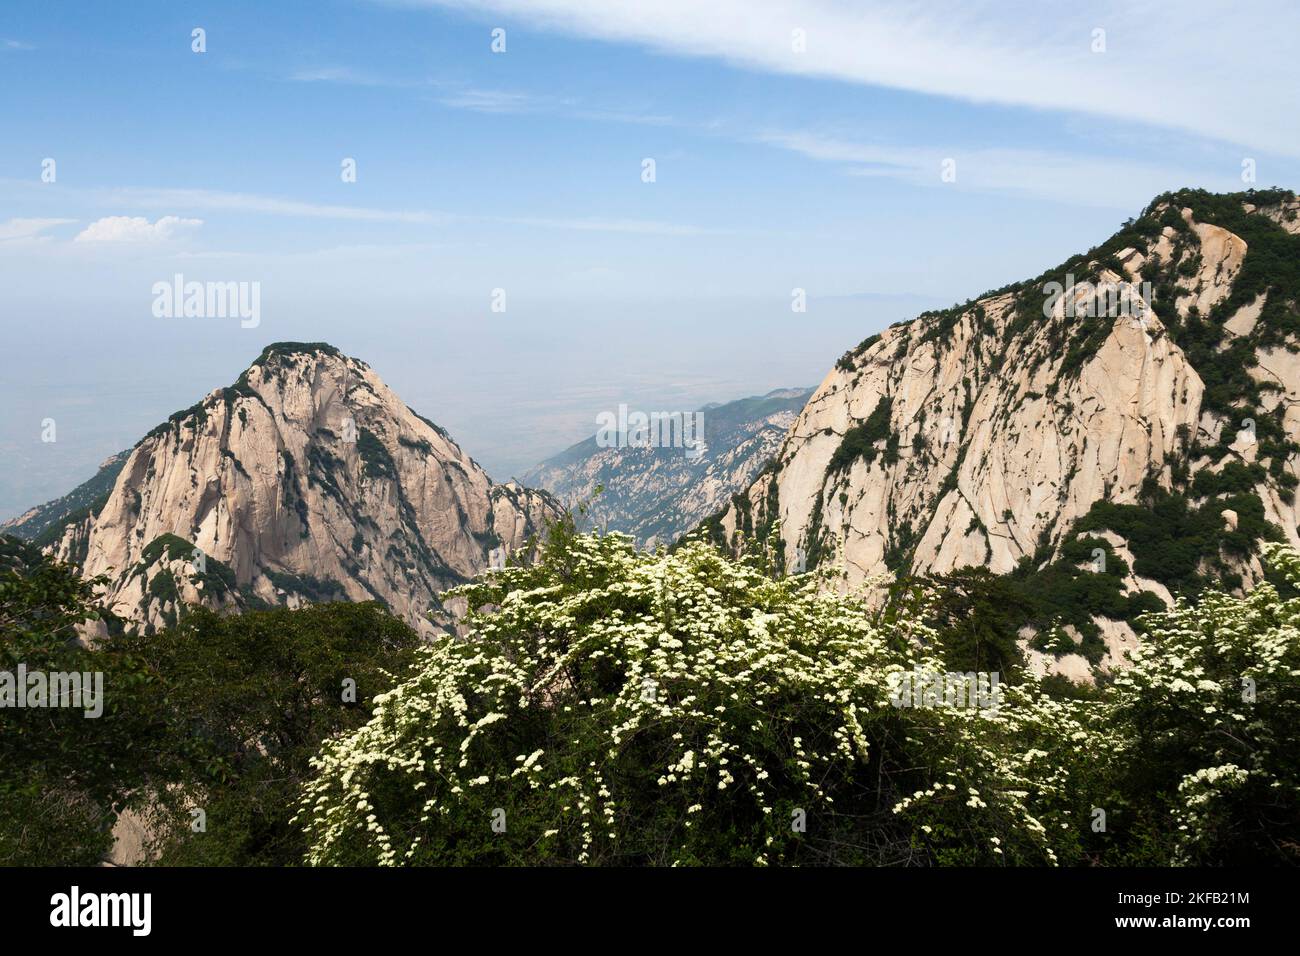 Views and landscape seen from the hiking trail path to the 5 peak of Huashan Mountain / Mount Hua / Mt Hua near Huayin, Weinan, China 714299 (125) Stock Photo